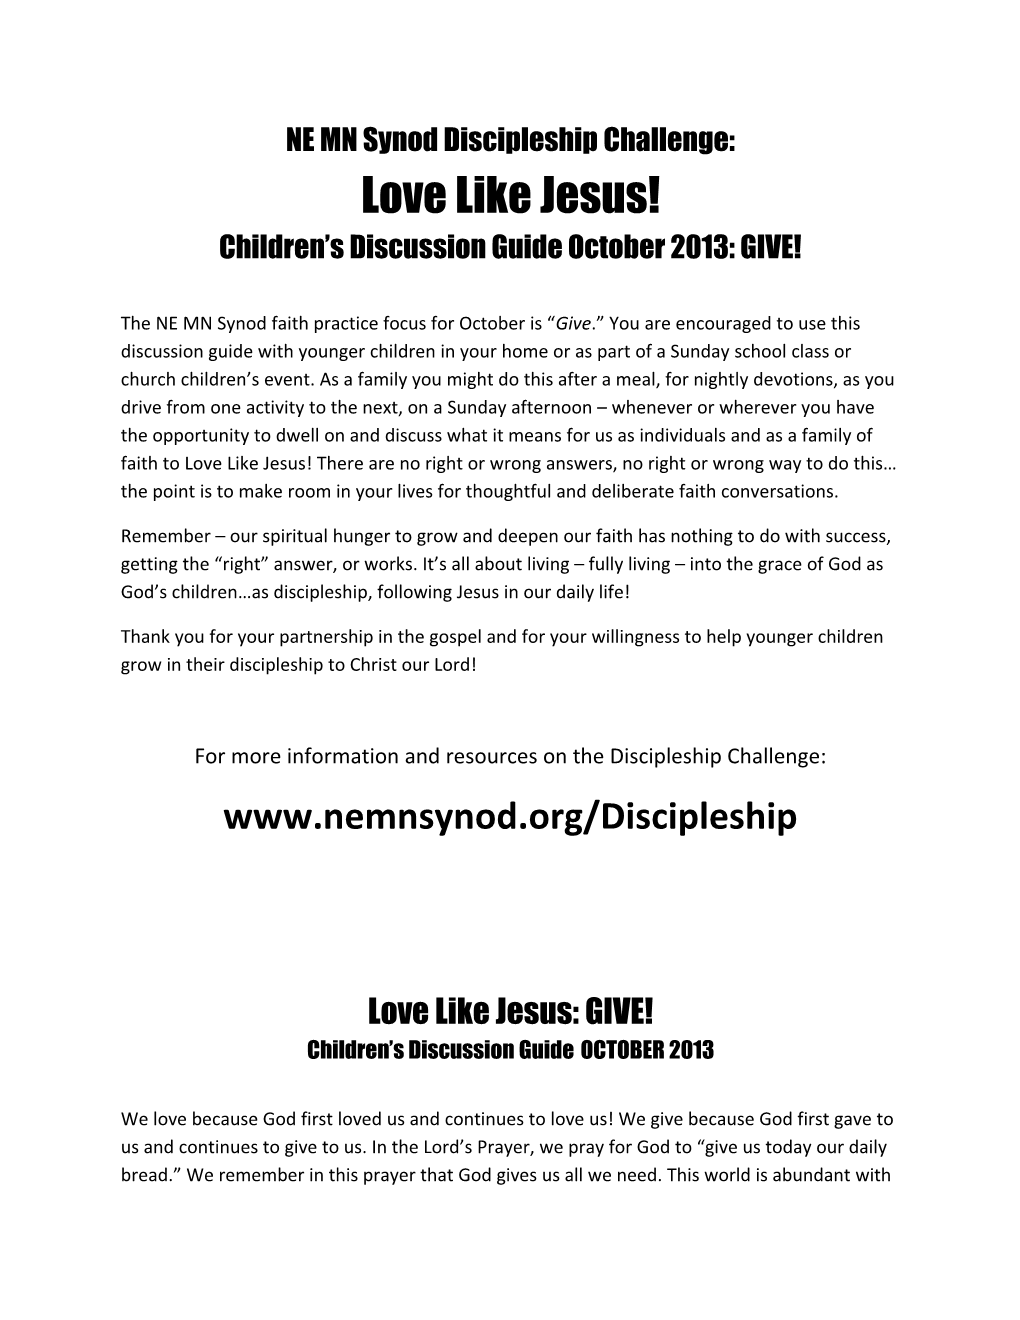 Love Like Jesus: Give